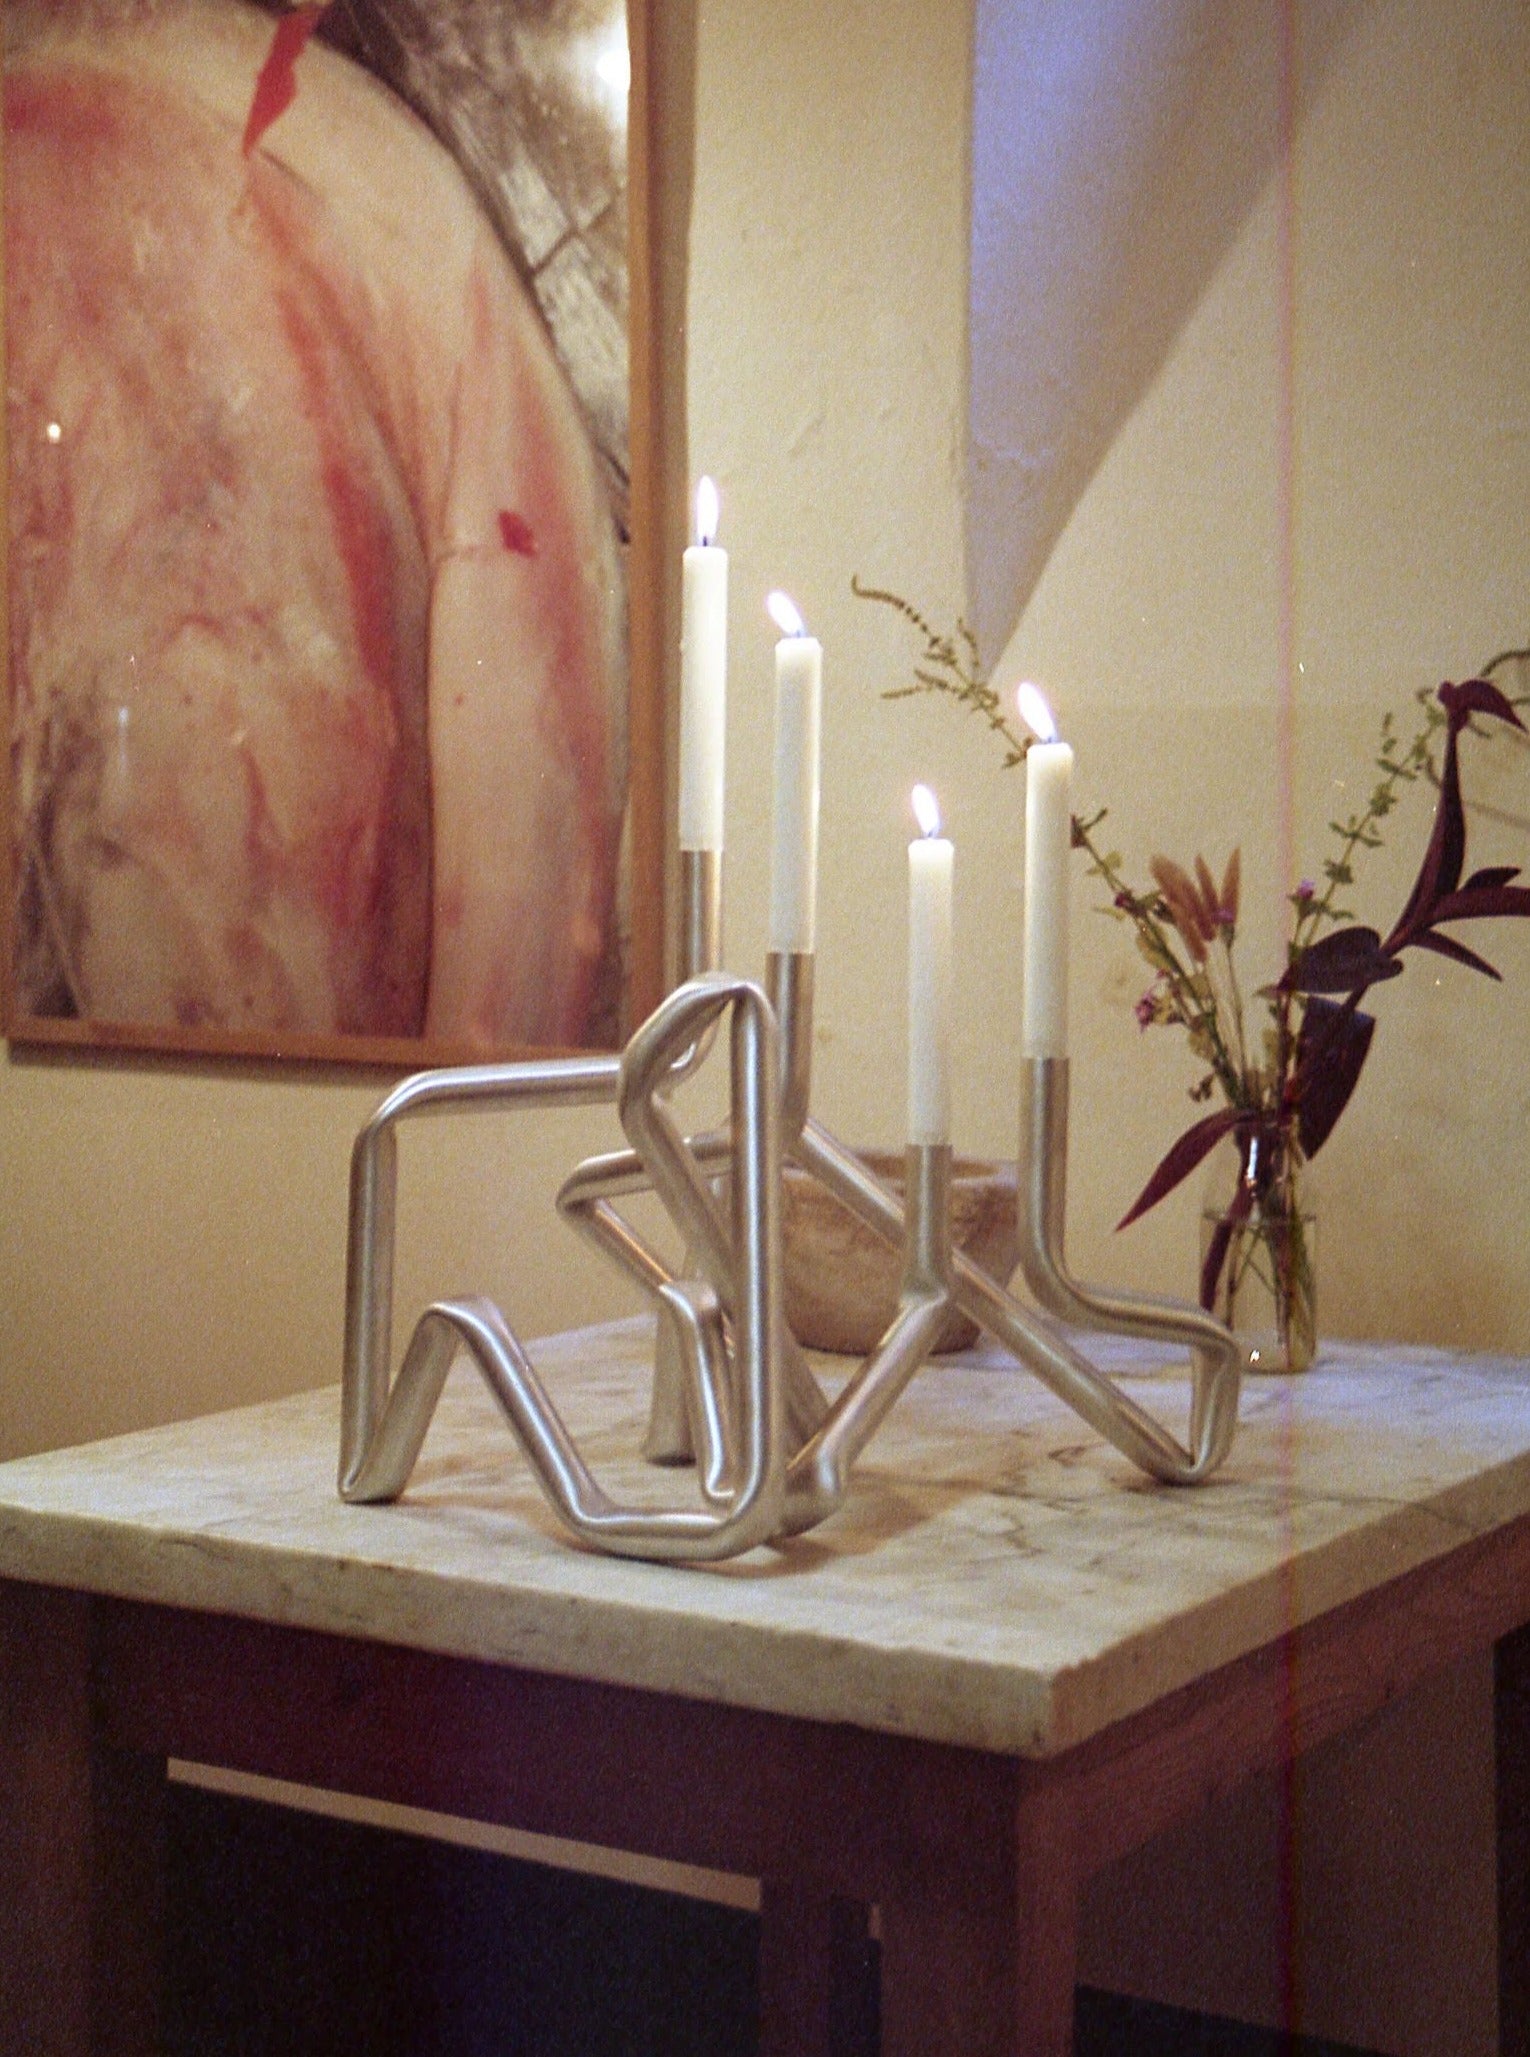 Set of Bucatini Candle Holders (Brushed Aluminium) for a stylish centerpiece